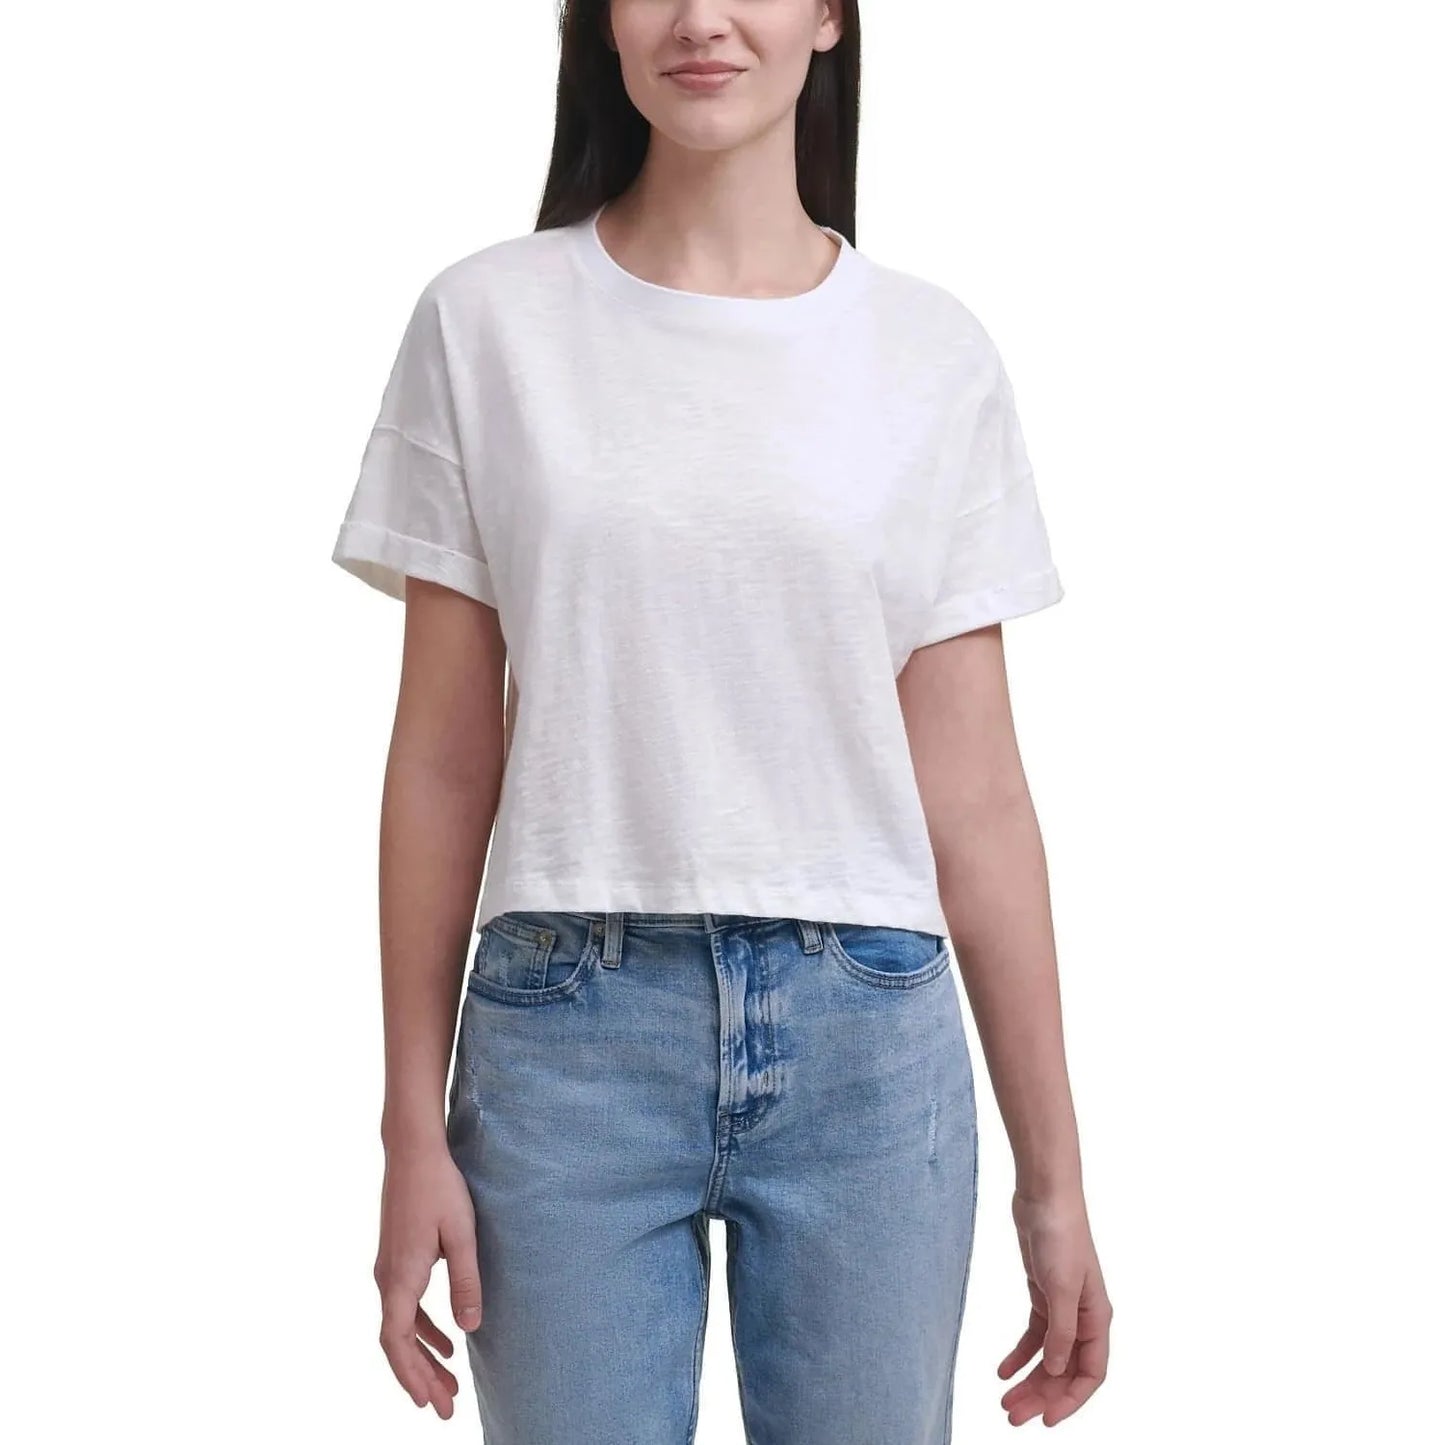 Calvin Klein-Calvin Klein Jeans Cropped Boxy-Fit Cotton T-Shirt, White, Size: L - Brandat Outlet